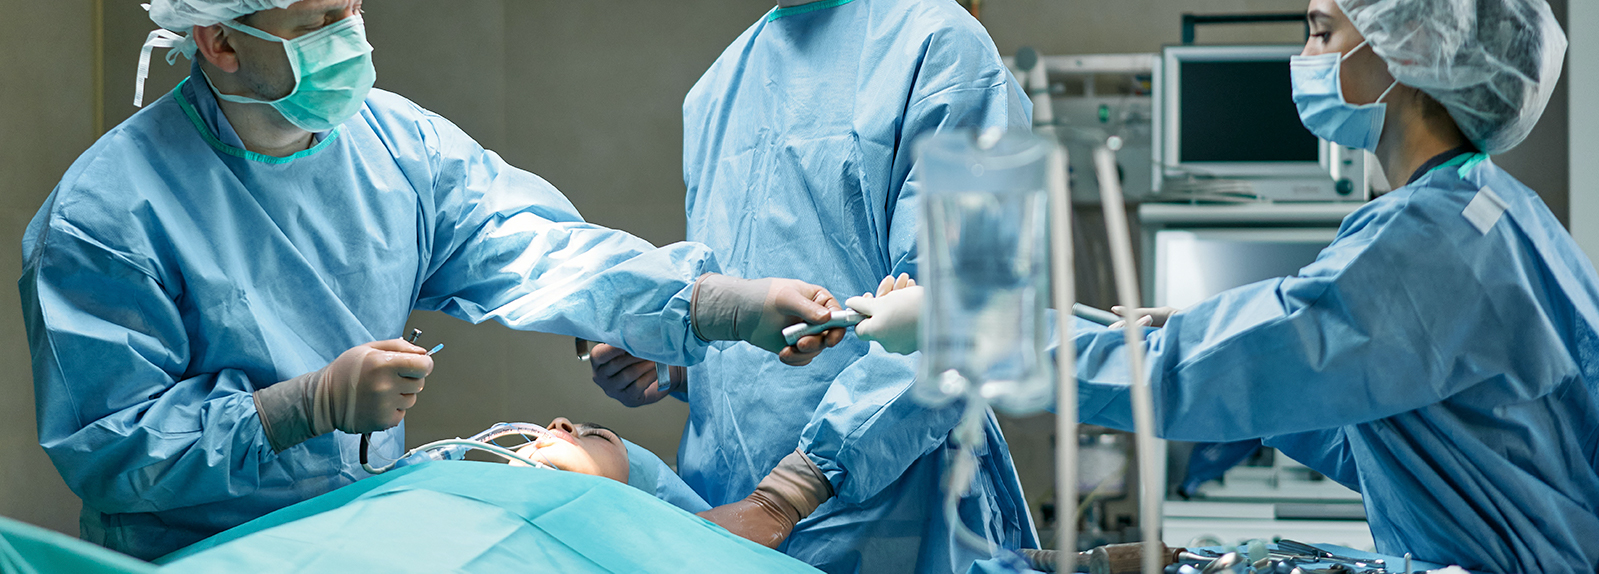 Anesthesie artsen en patiënt